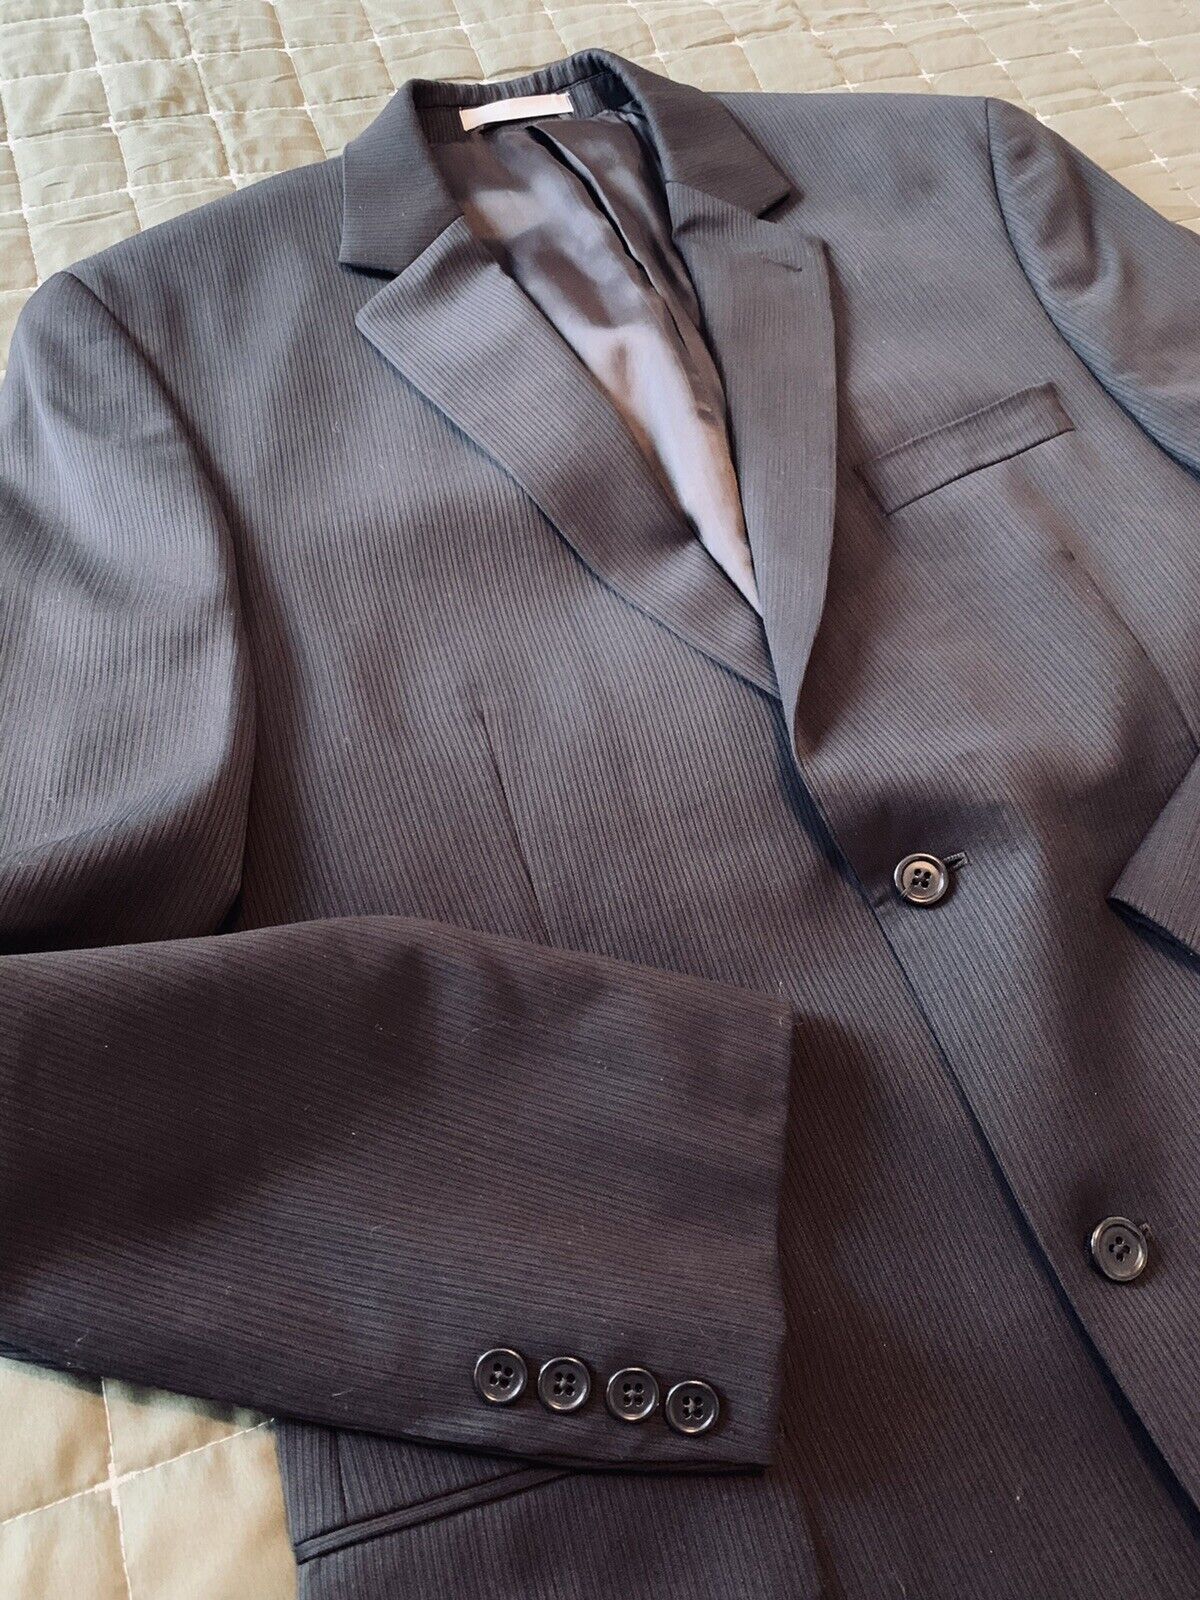 Michael Kors Mens Classic Fit Wool Sport Coat Black Suit Jacket Blazer 42 L